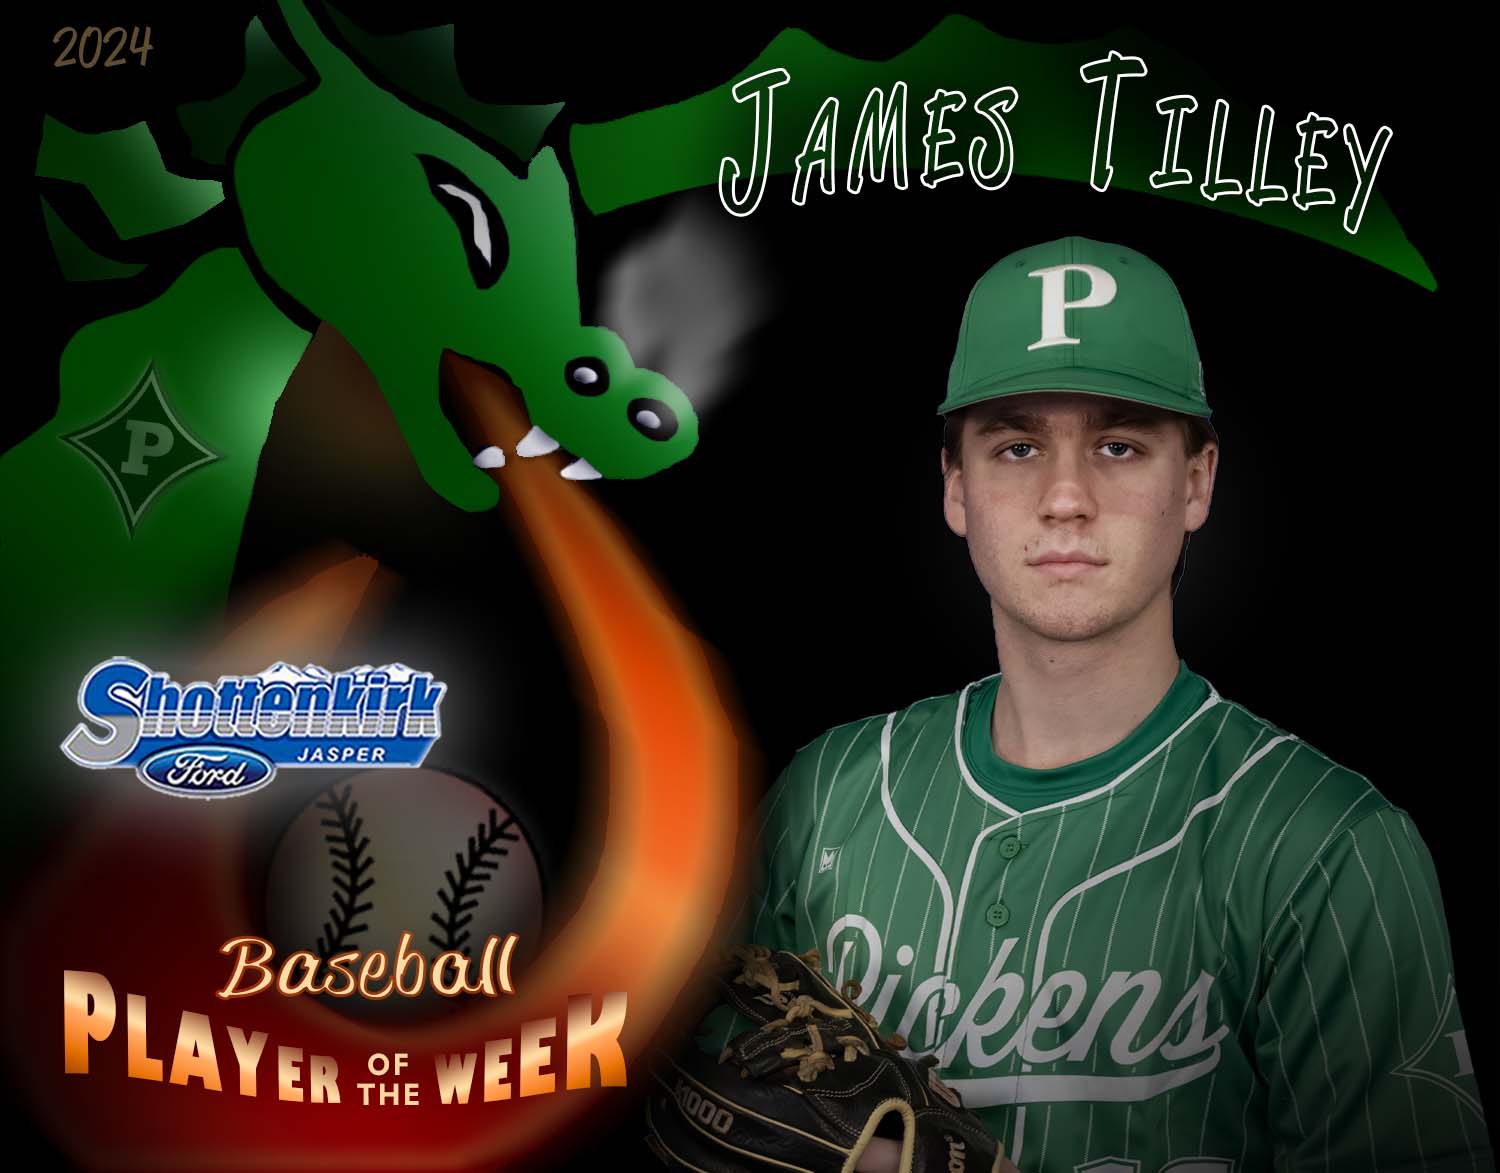 PHS Dragons Baseball Player of the Week #3 - Jame Tilley